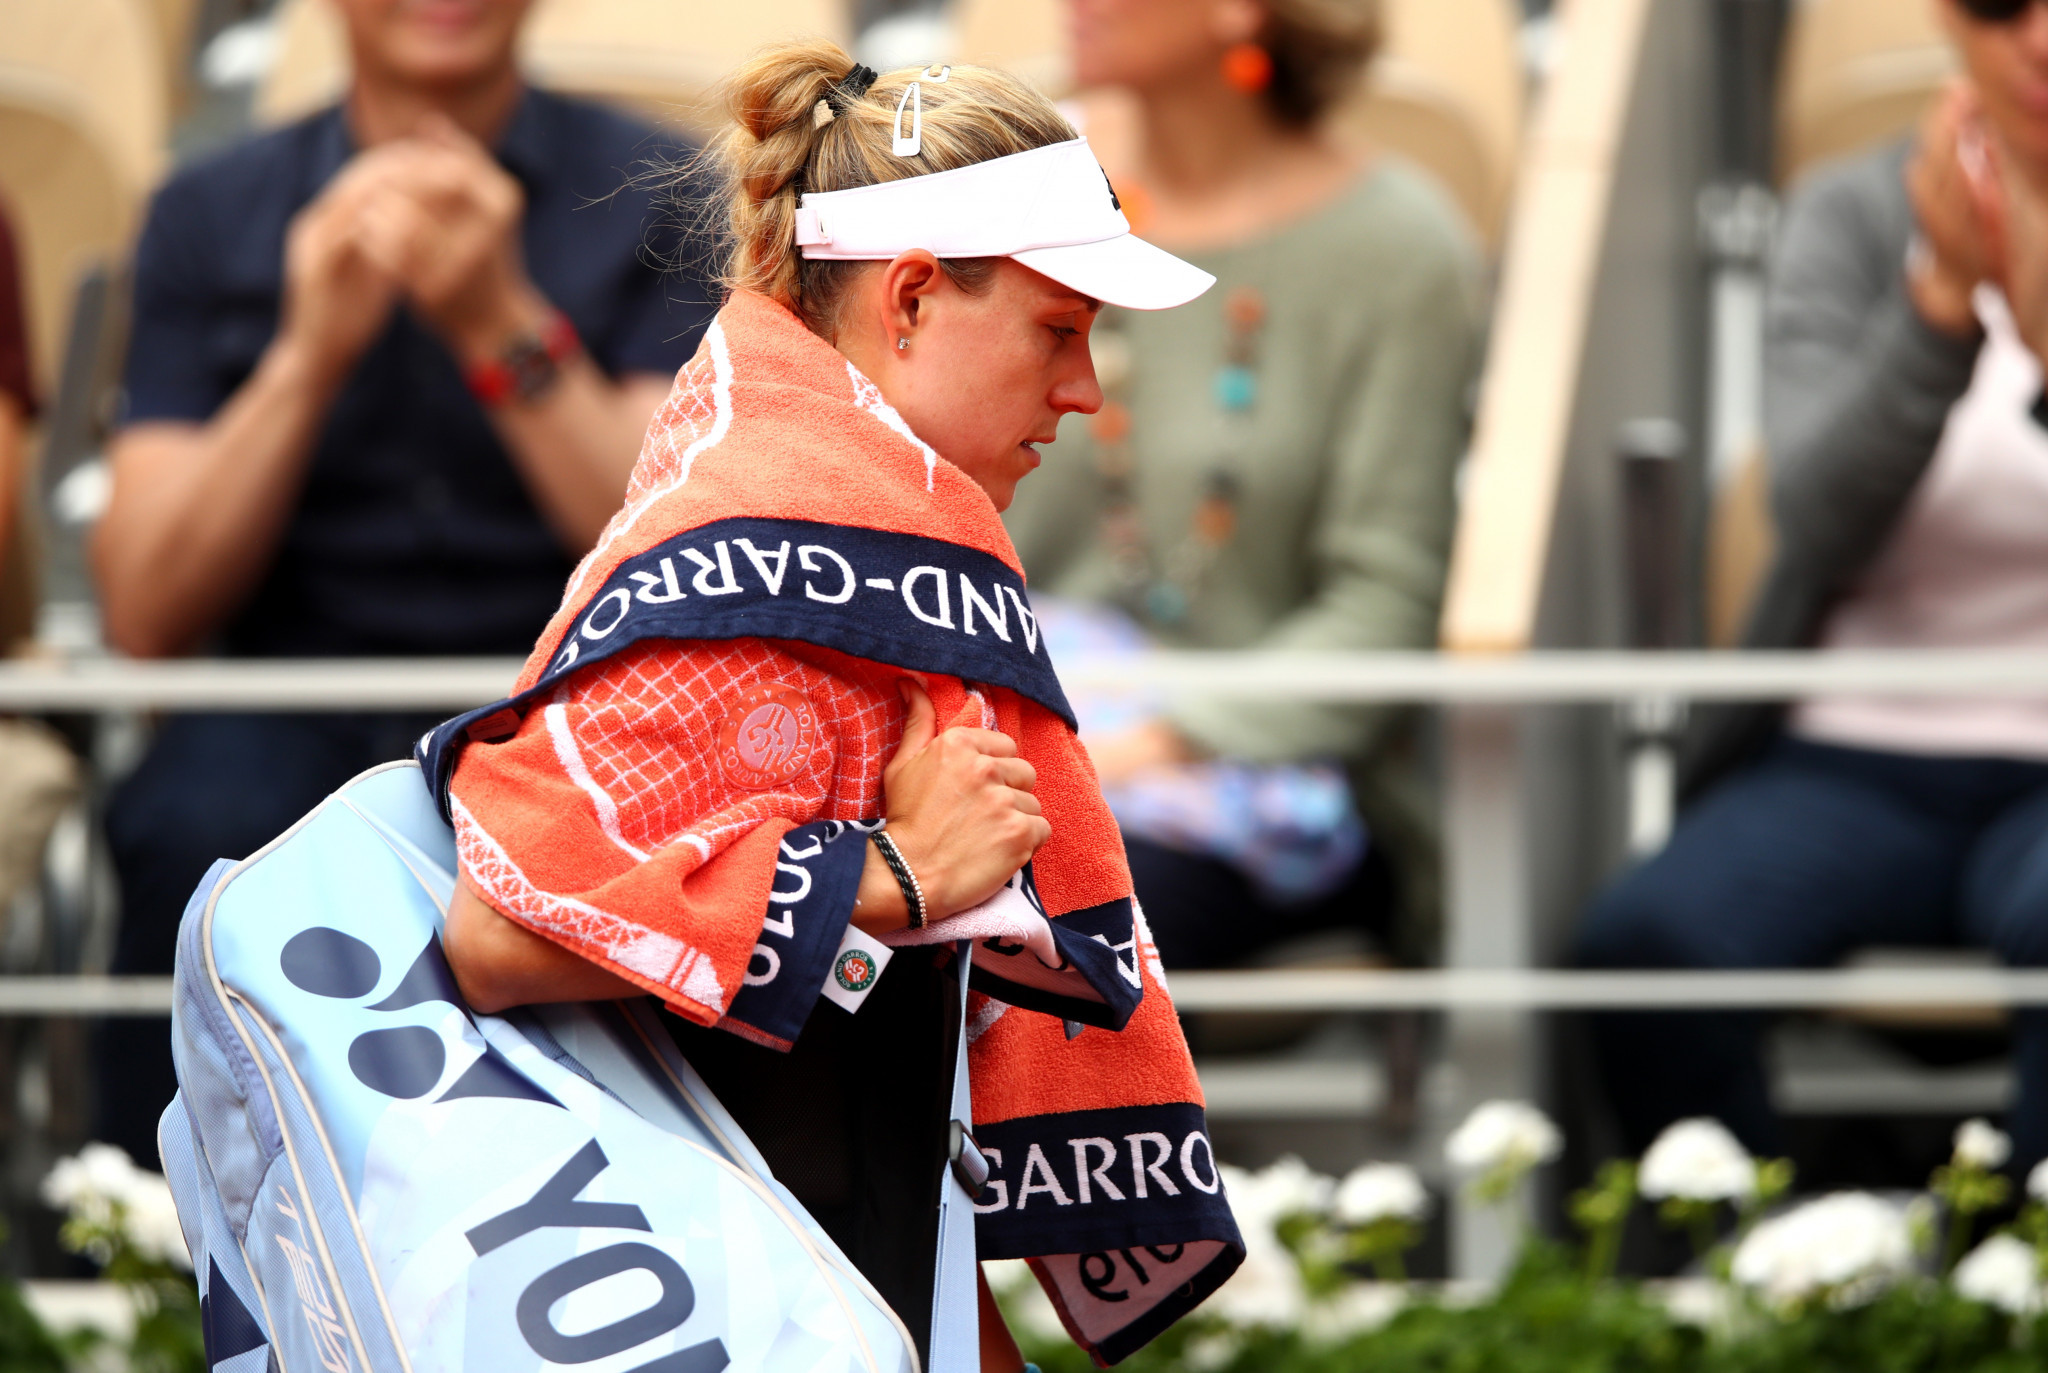 Potapova stuns Wimbledon champion Kerber in opening round of French Open